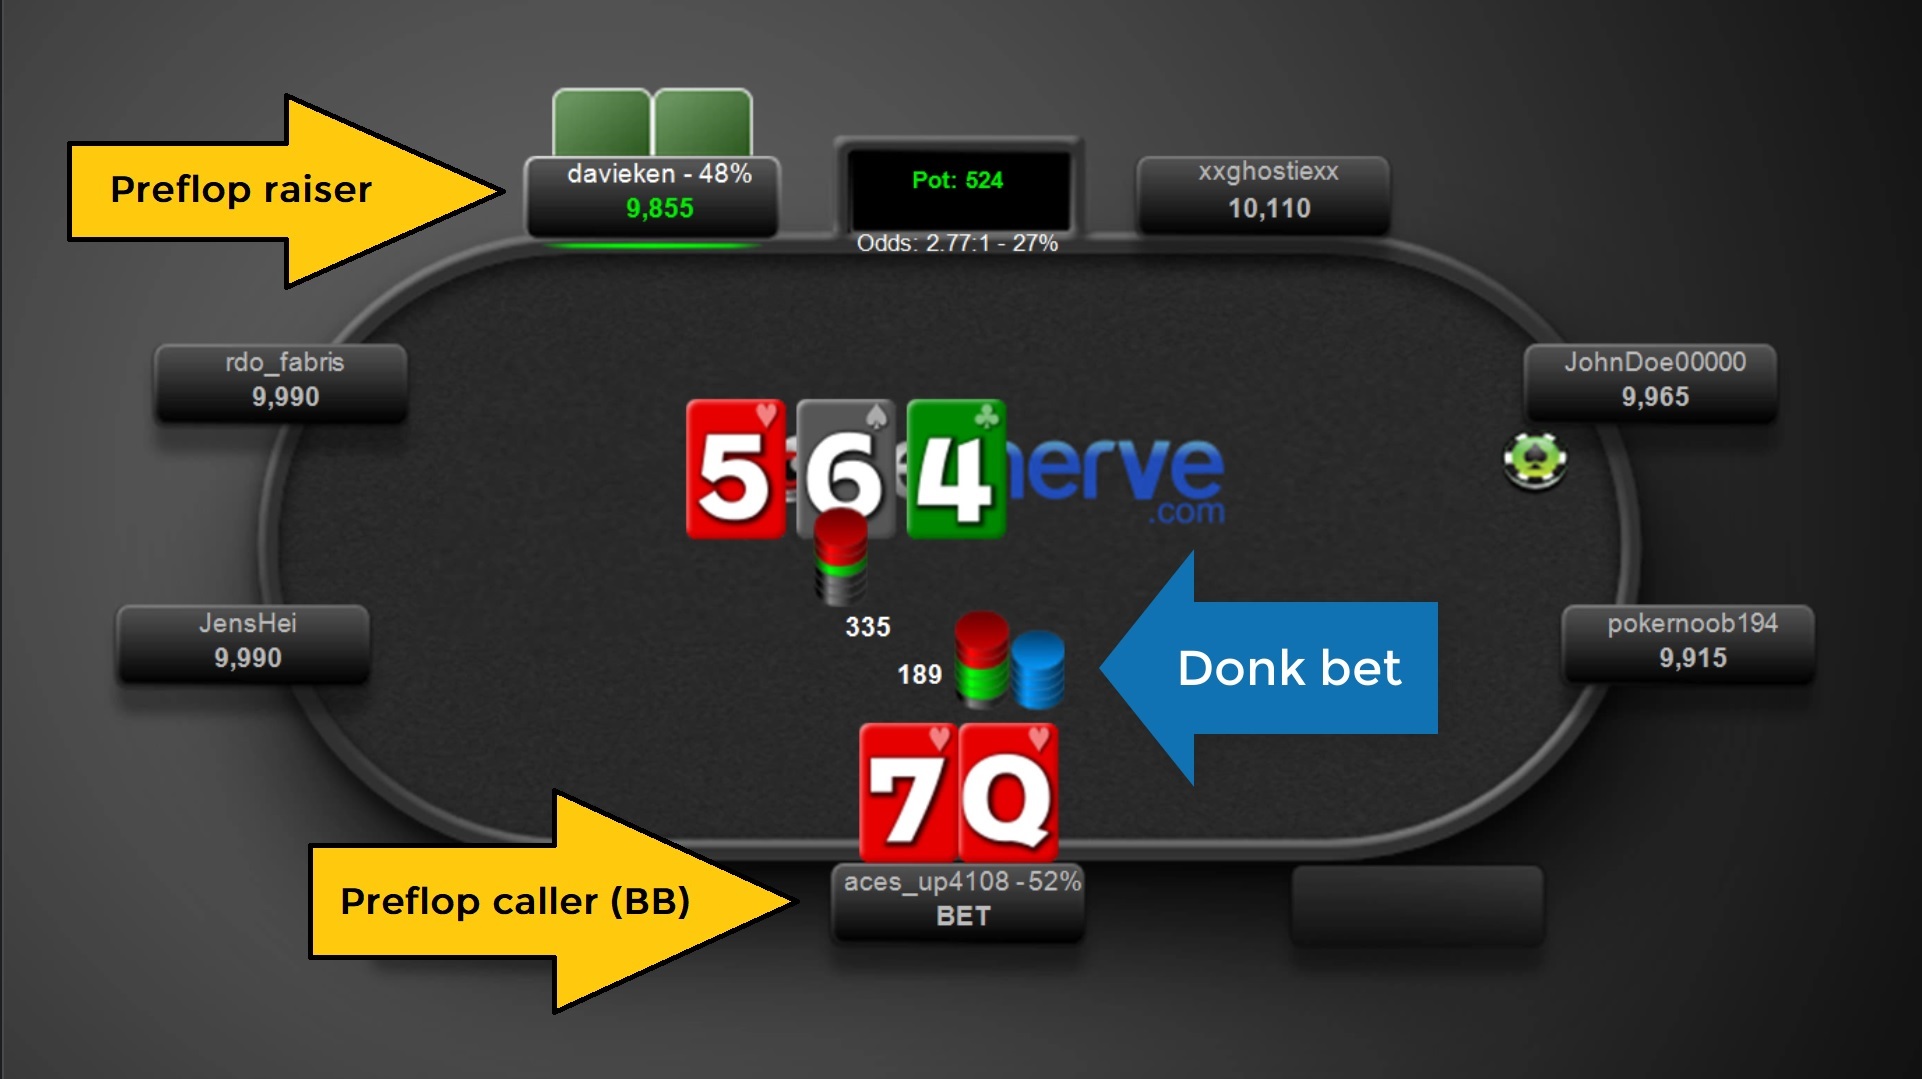 Video poker betting strategy gps robot forex profit